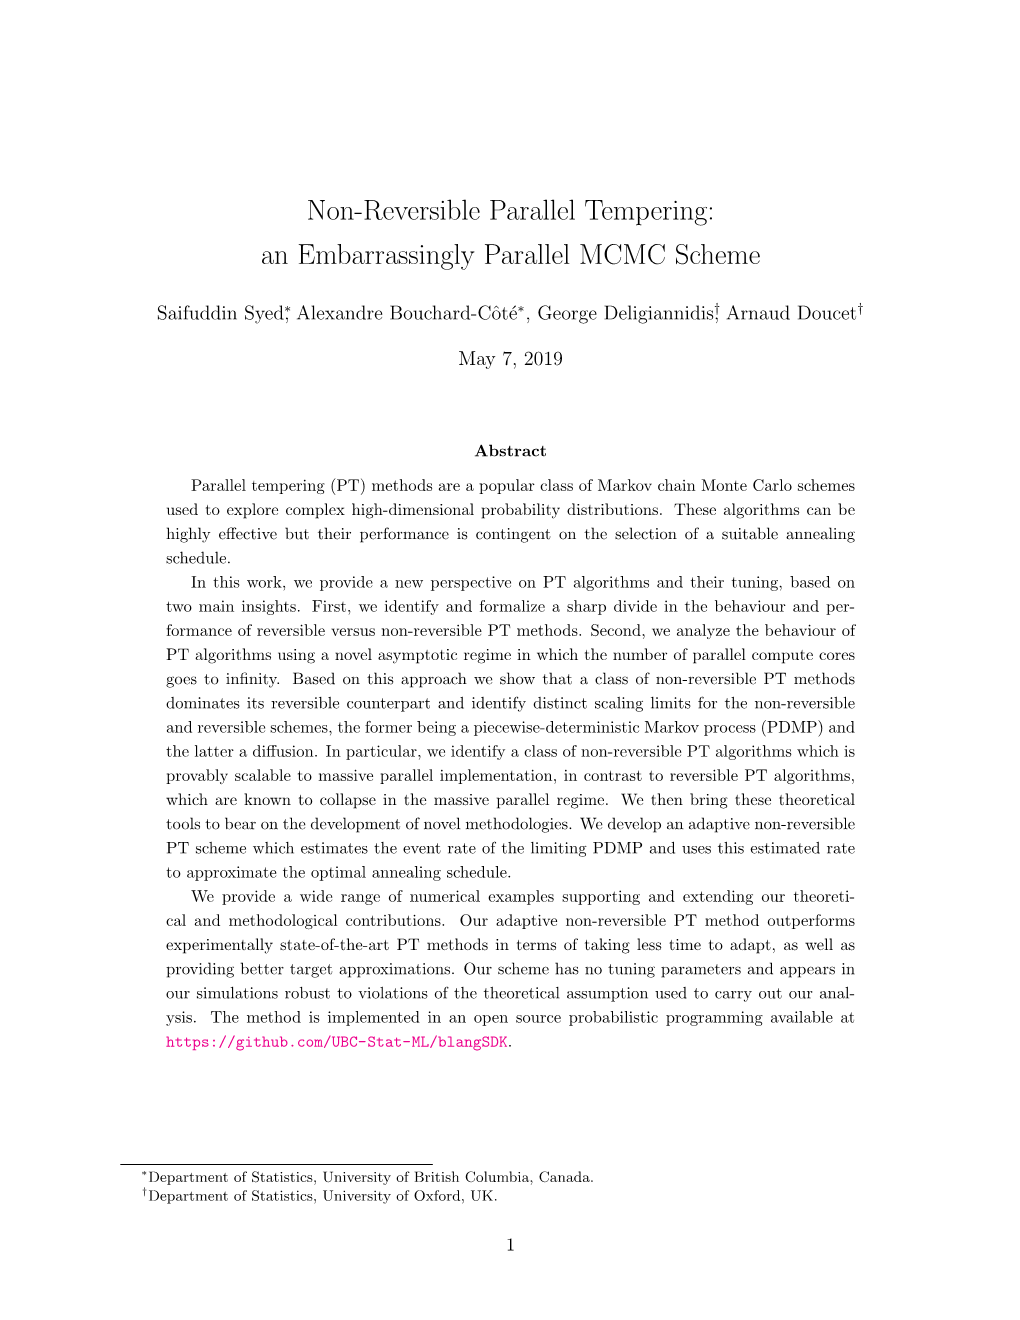 Non-Reversible Parallel Tempering: an Embarrassingly Parallel MCMC Scheme